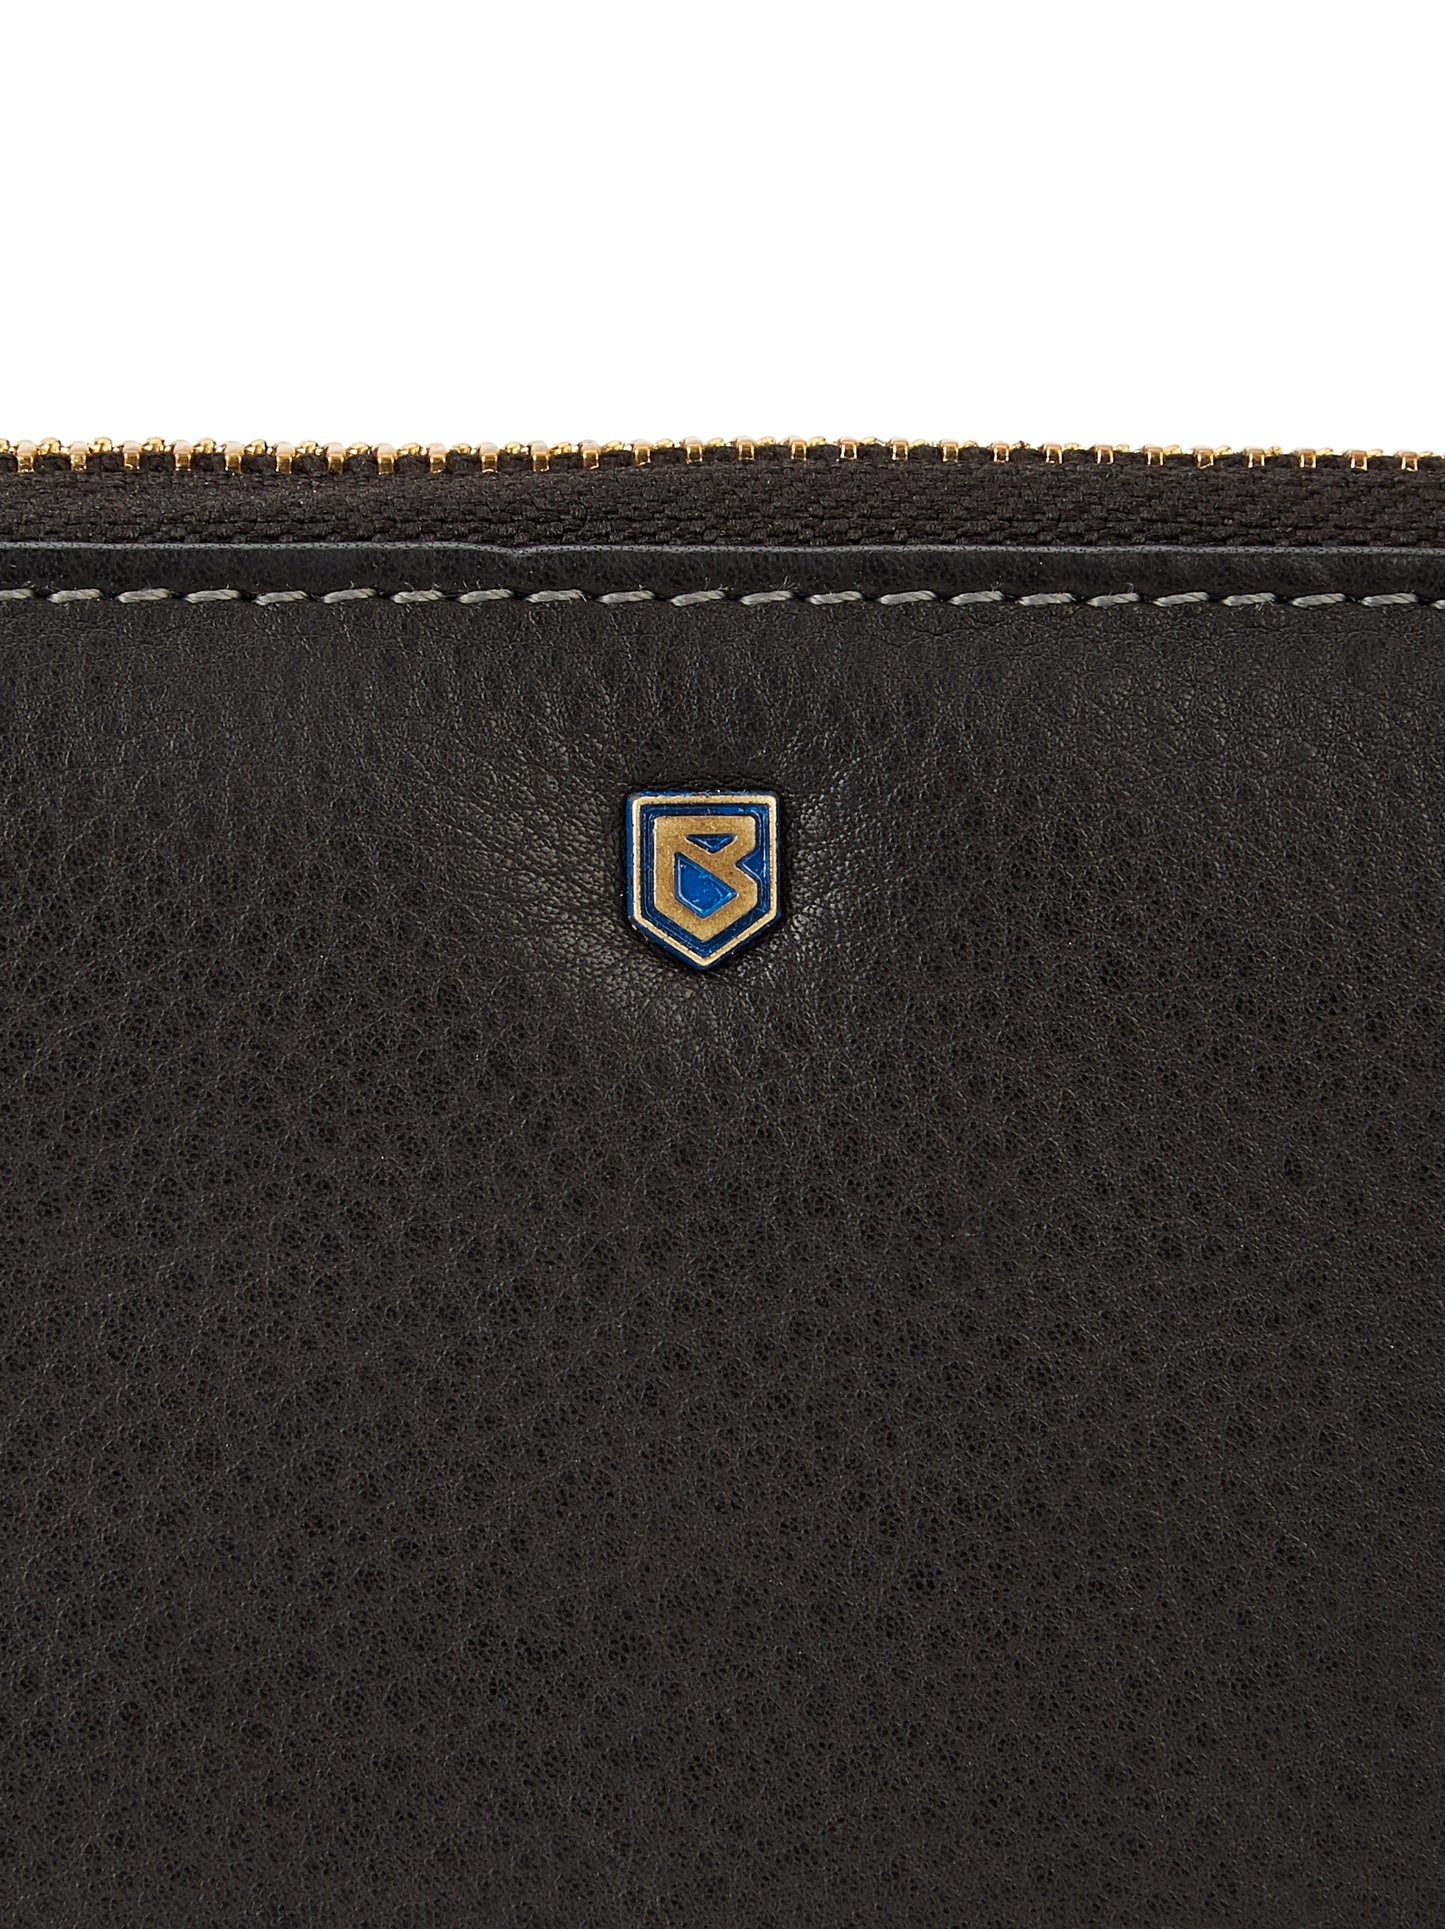 Portlick Leather Wallet  in Black